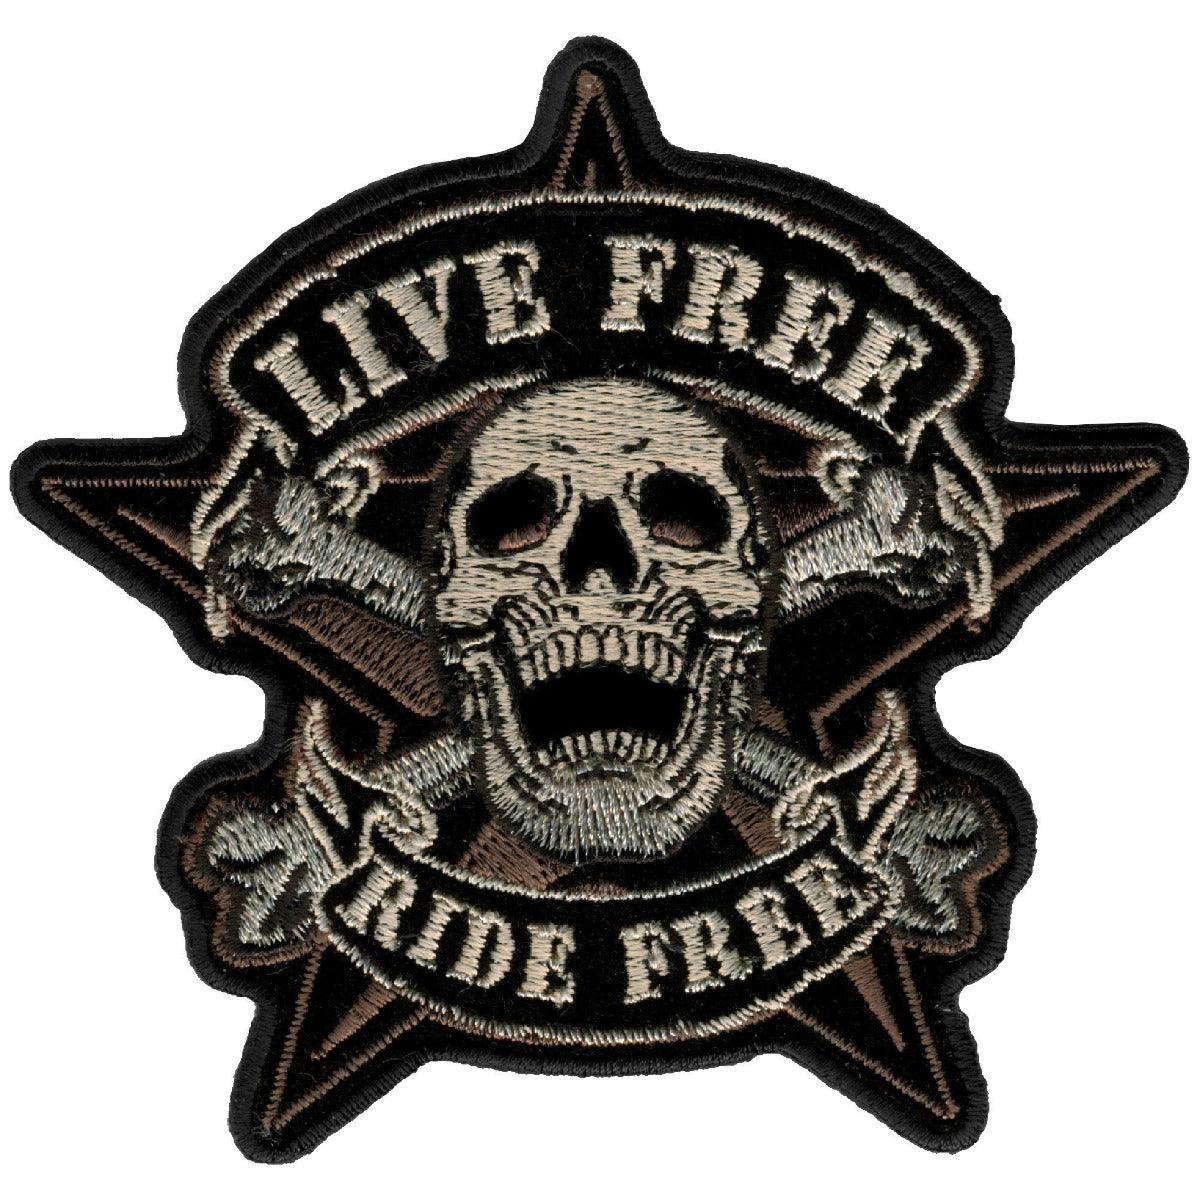 Hot Leathers 4" X 4" Live Free Skull Biker Patch - American Legend Rider